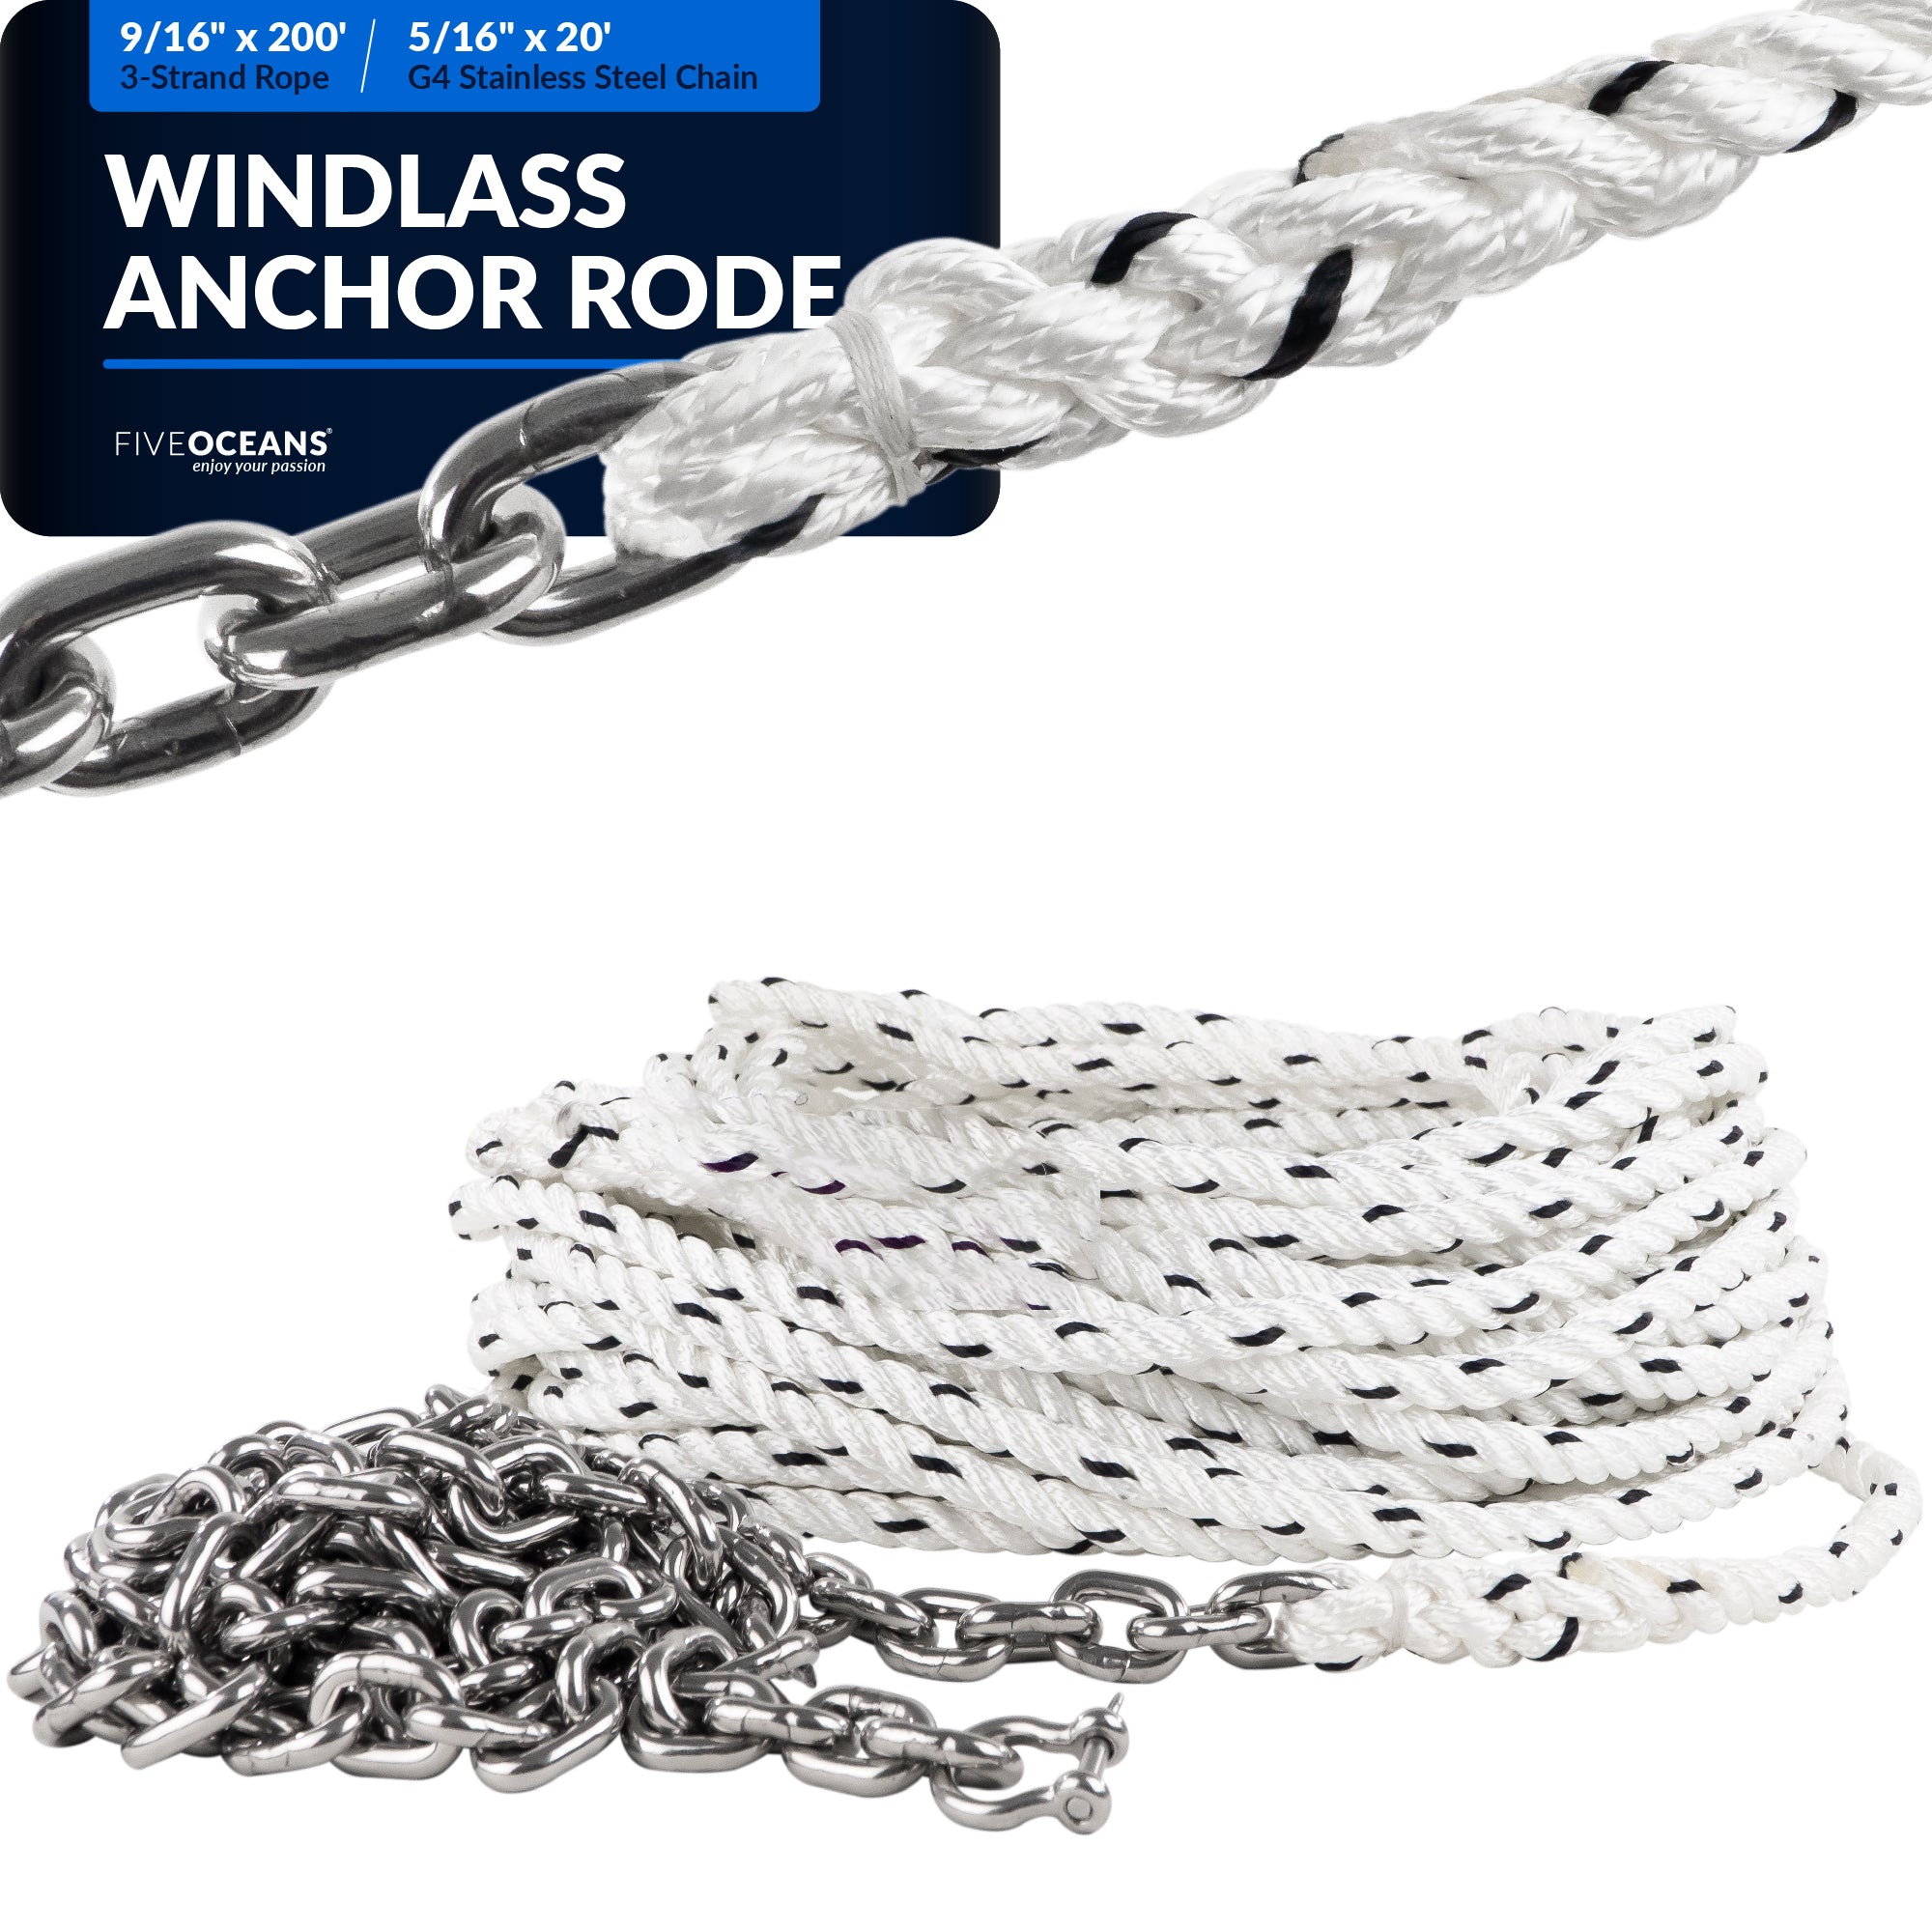 Windlass Anchor Rode, 9/16" x 200' Nylon 3-Strand Rope, 5/16 x 20' G4 Stainless Steel Chain - FO4531